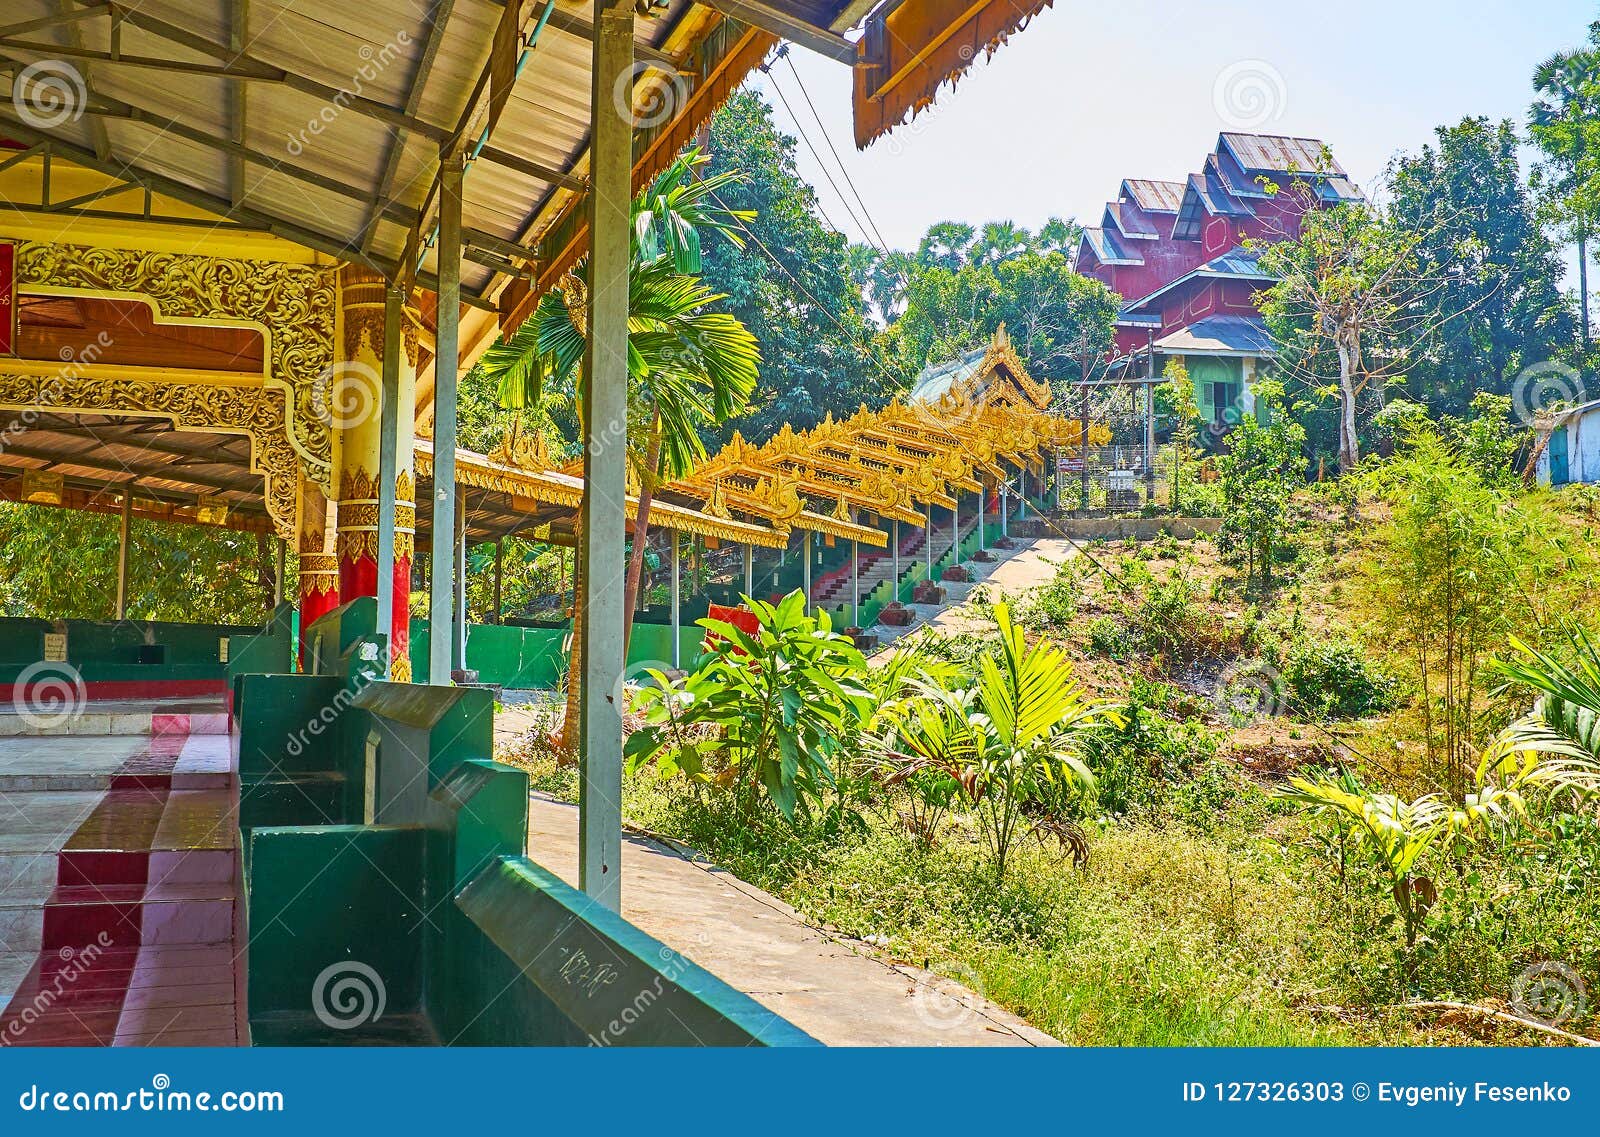 the stairway of ngar htat gyi buddha temple, yangon, myanmar